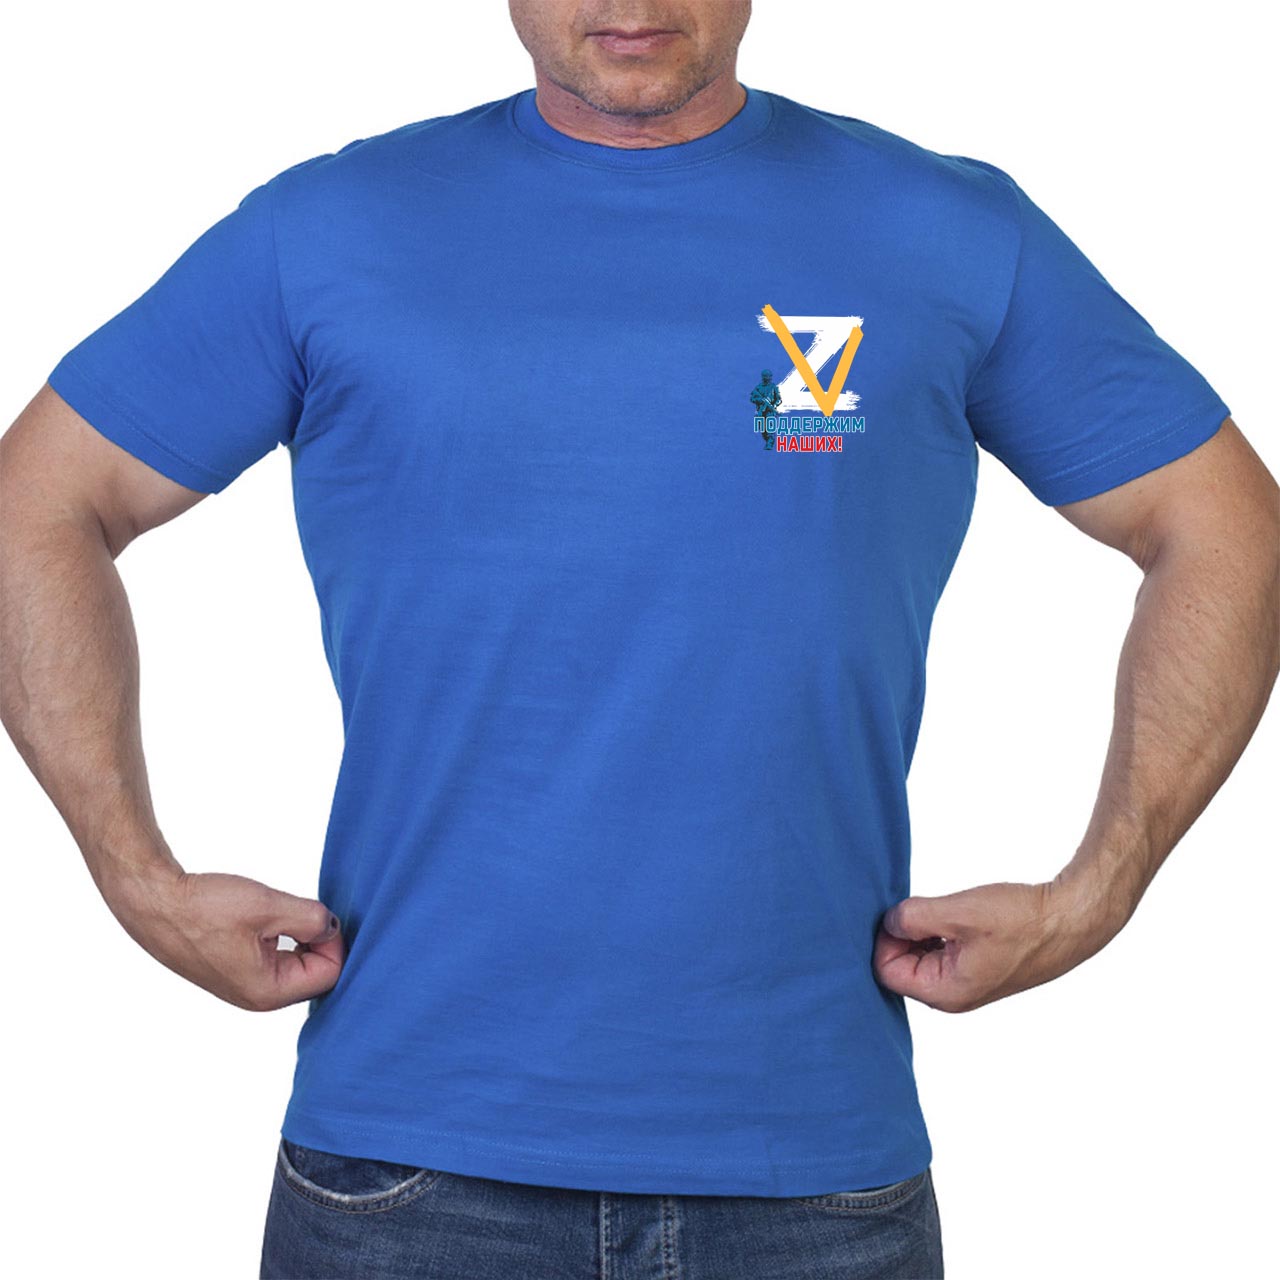 Недорогая мужская футболка со знаком Операции Z